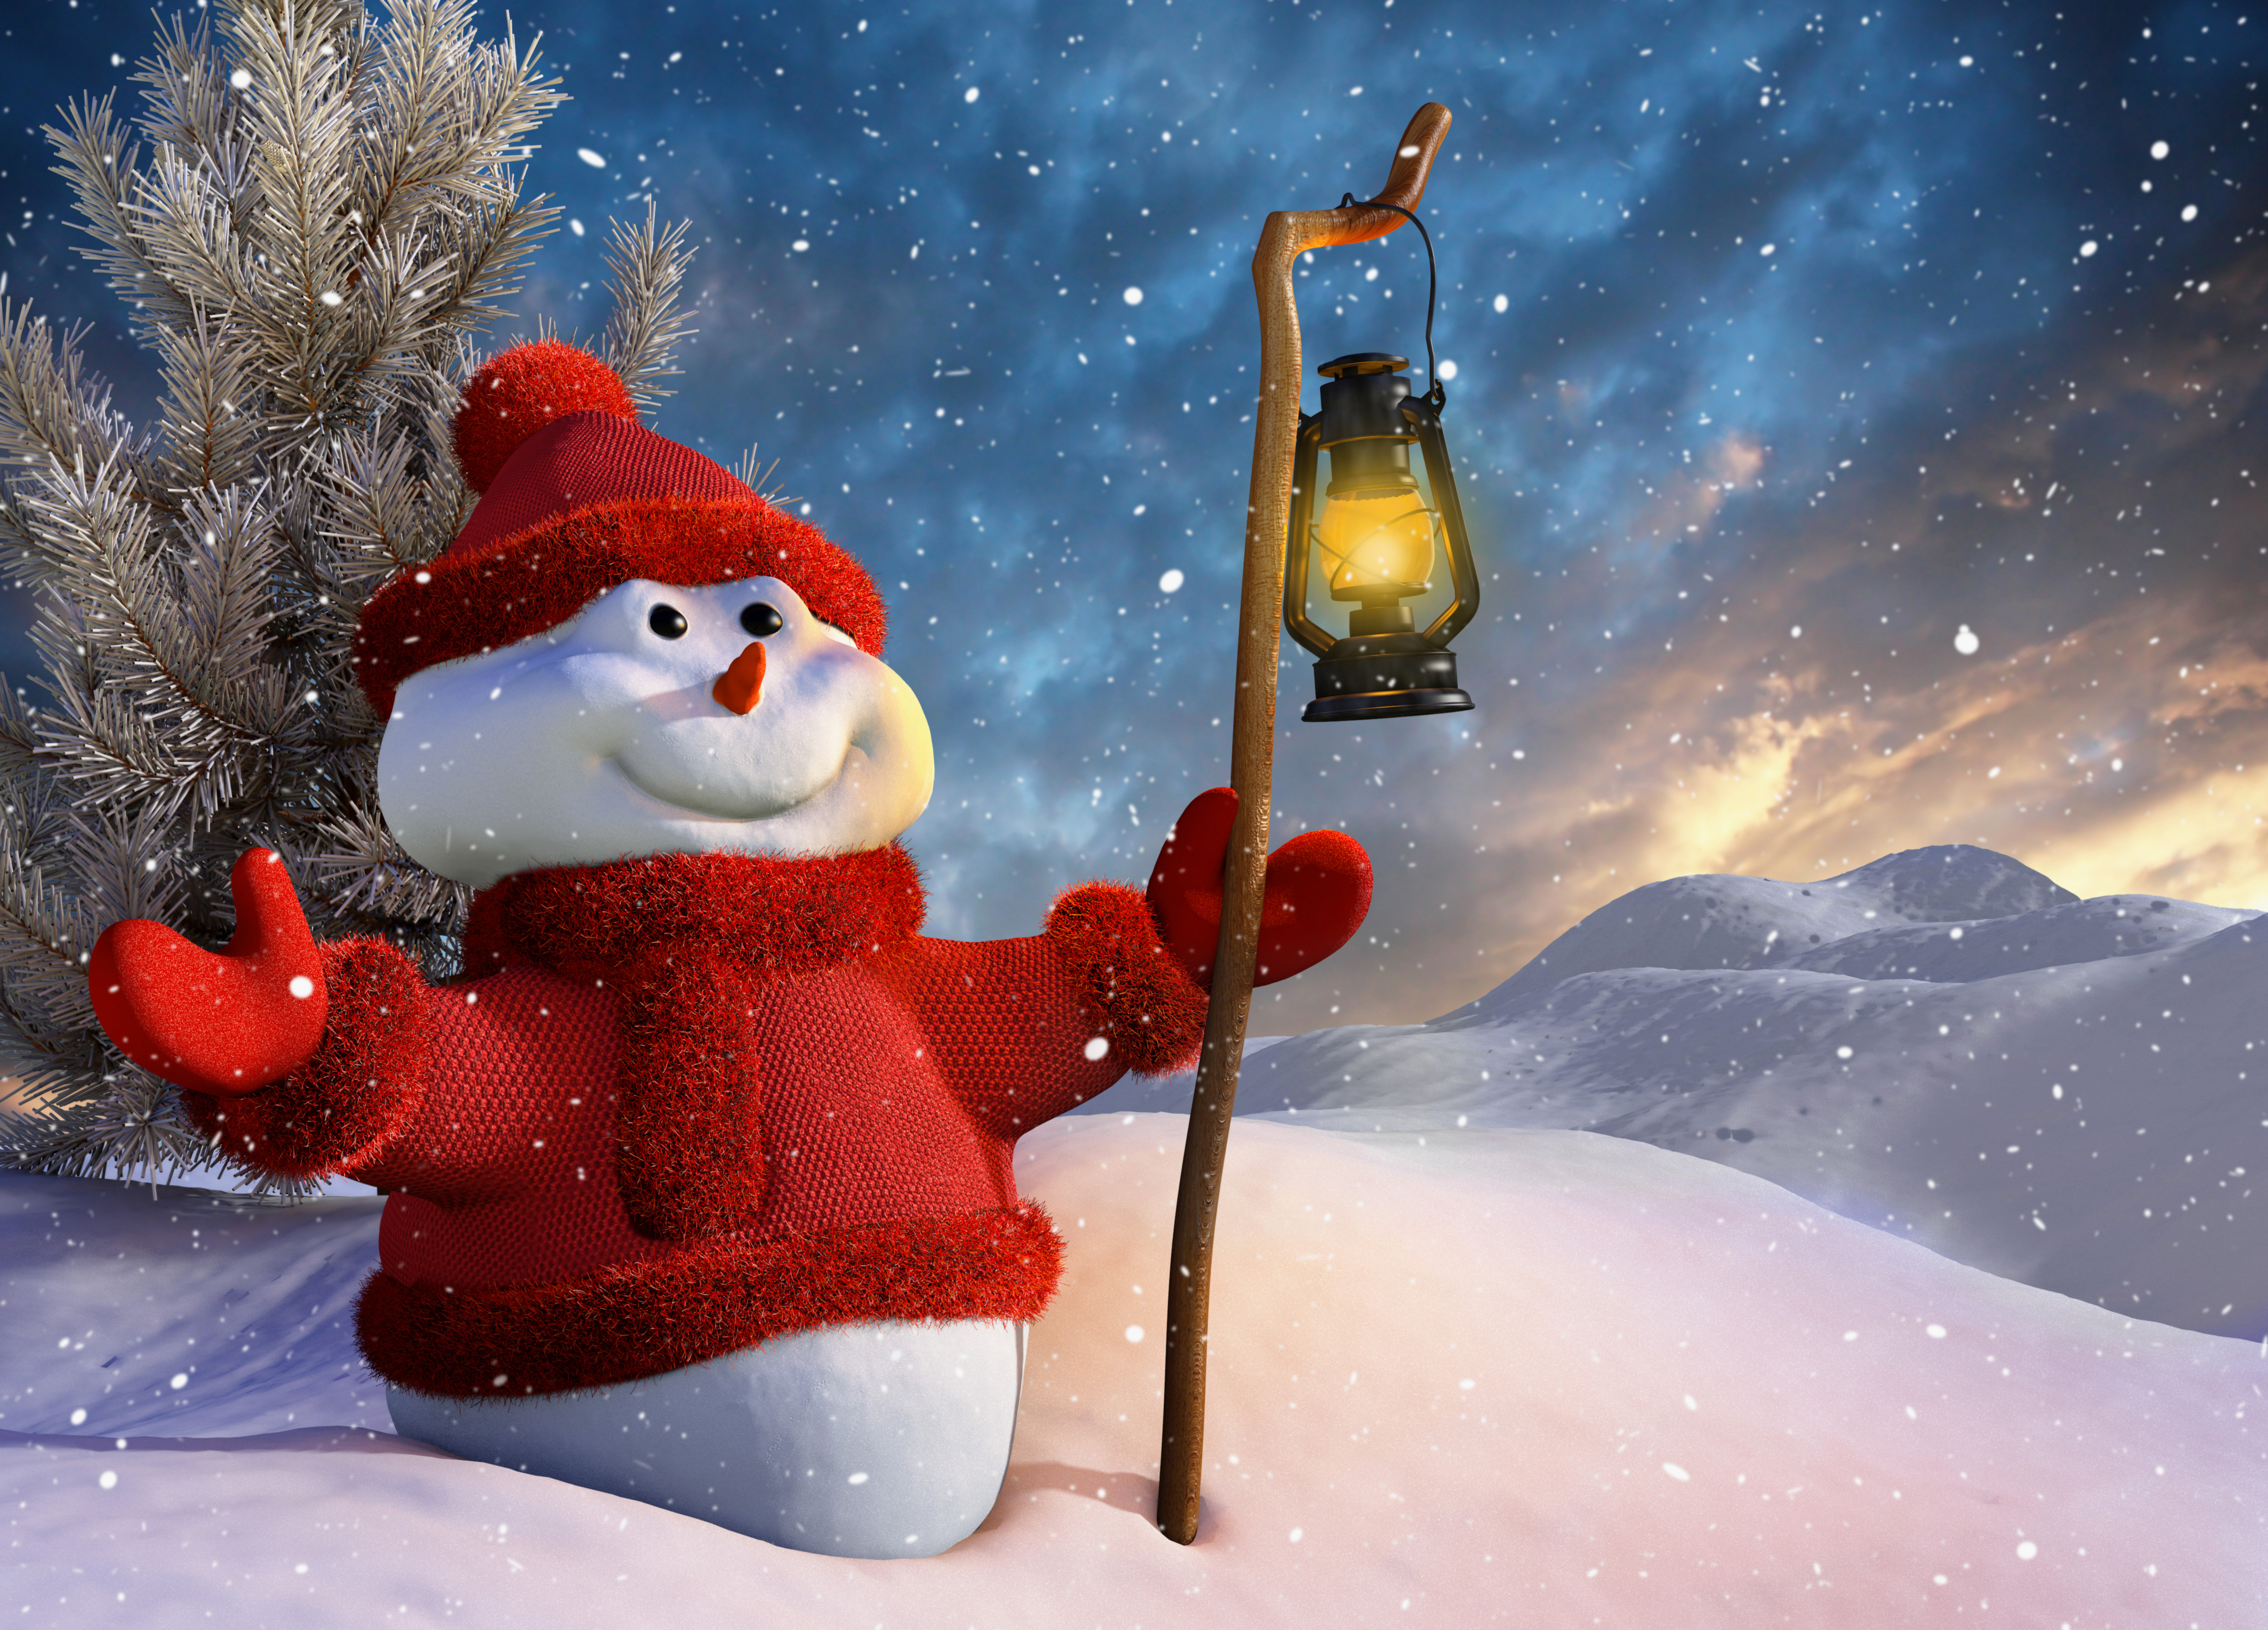 Cute Winter Snowman Background​